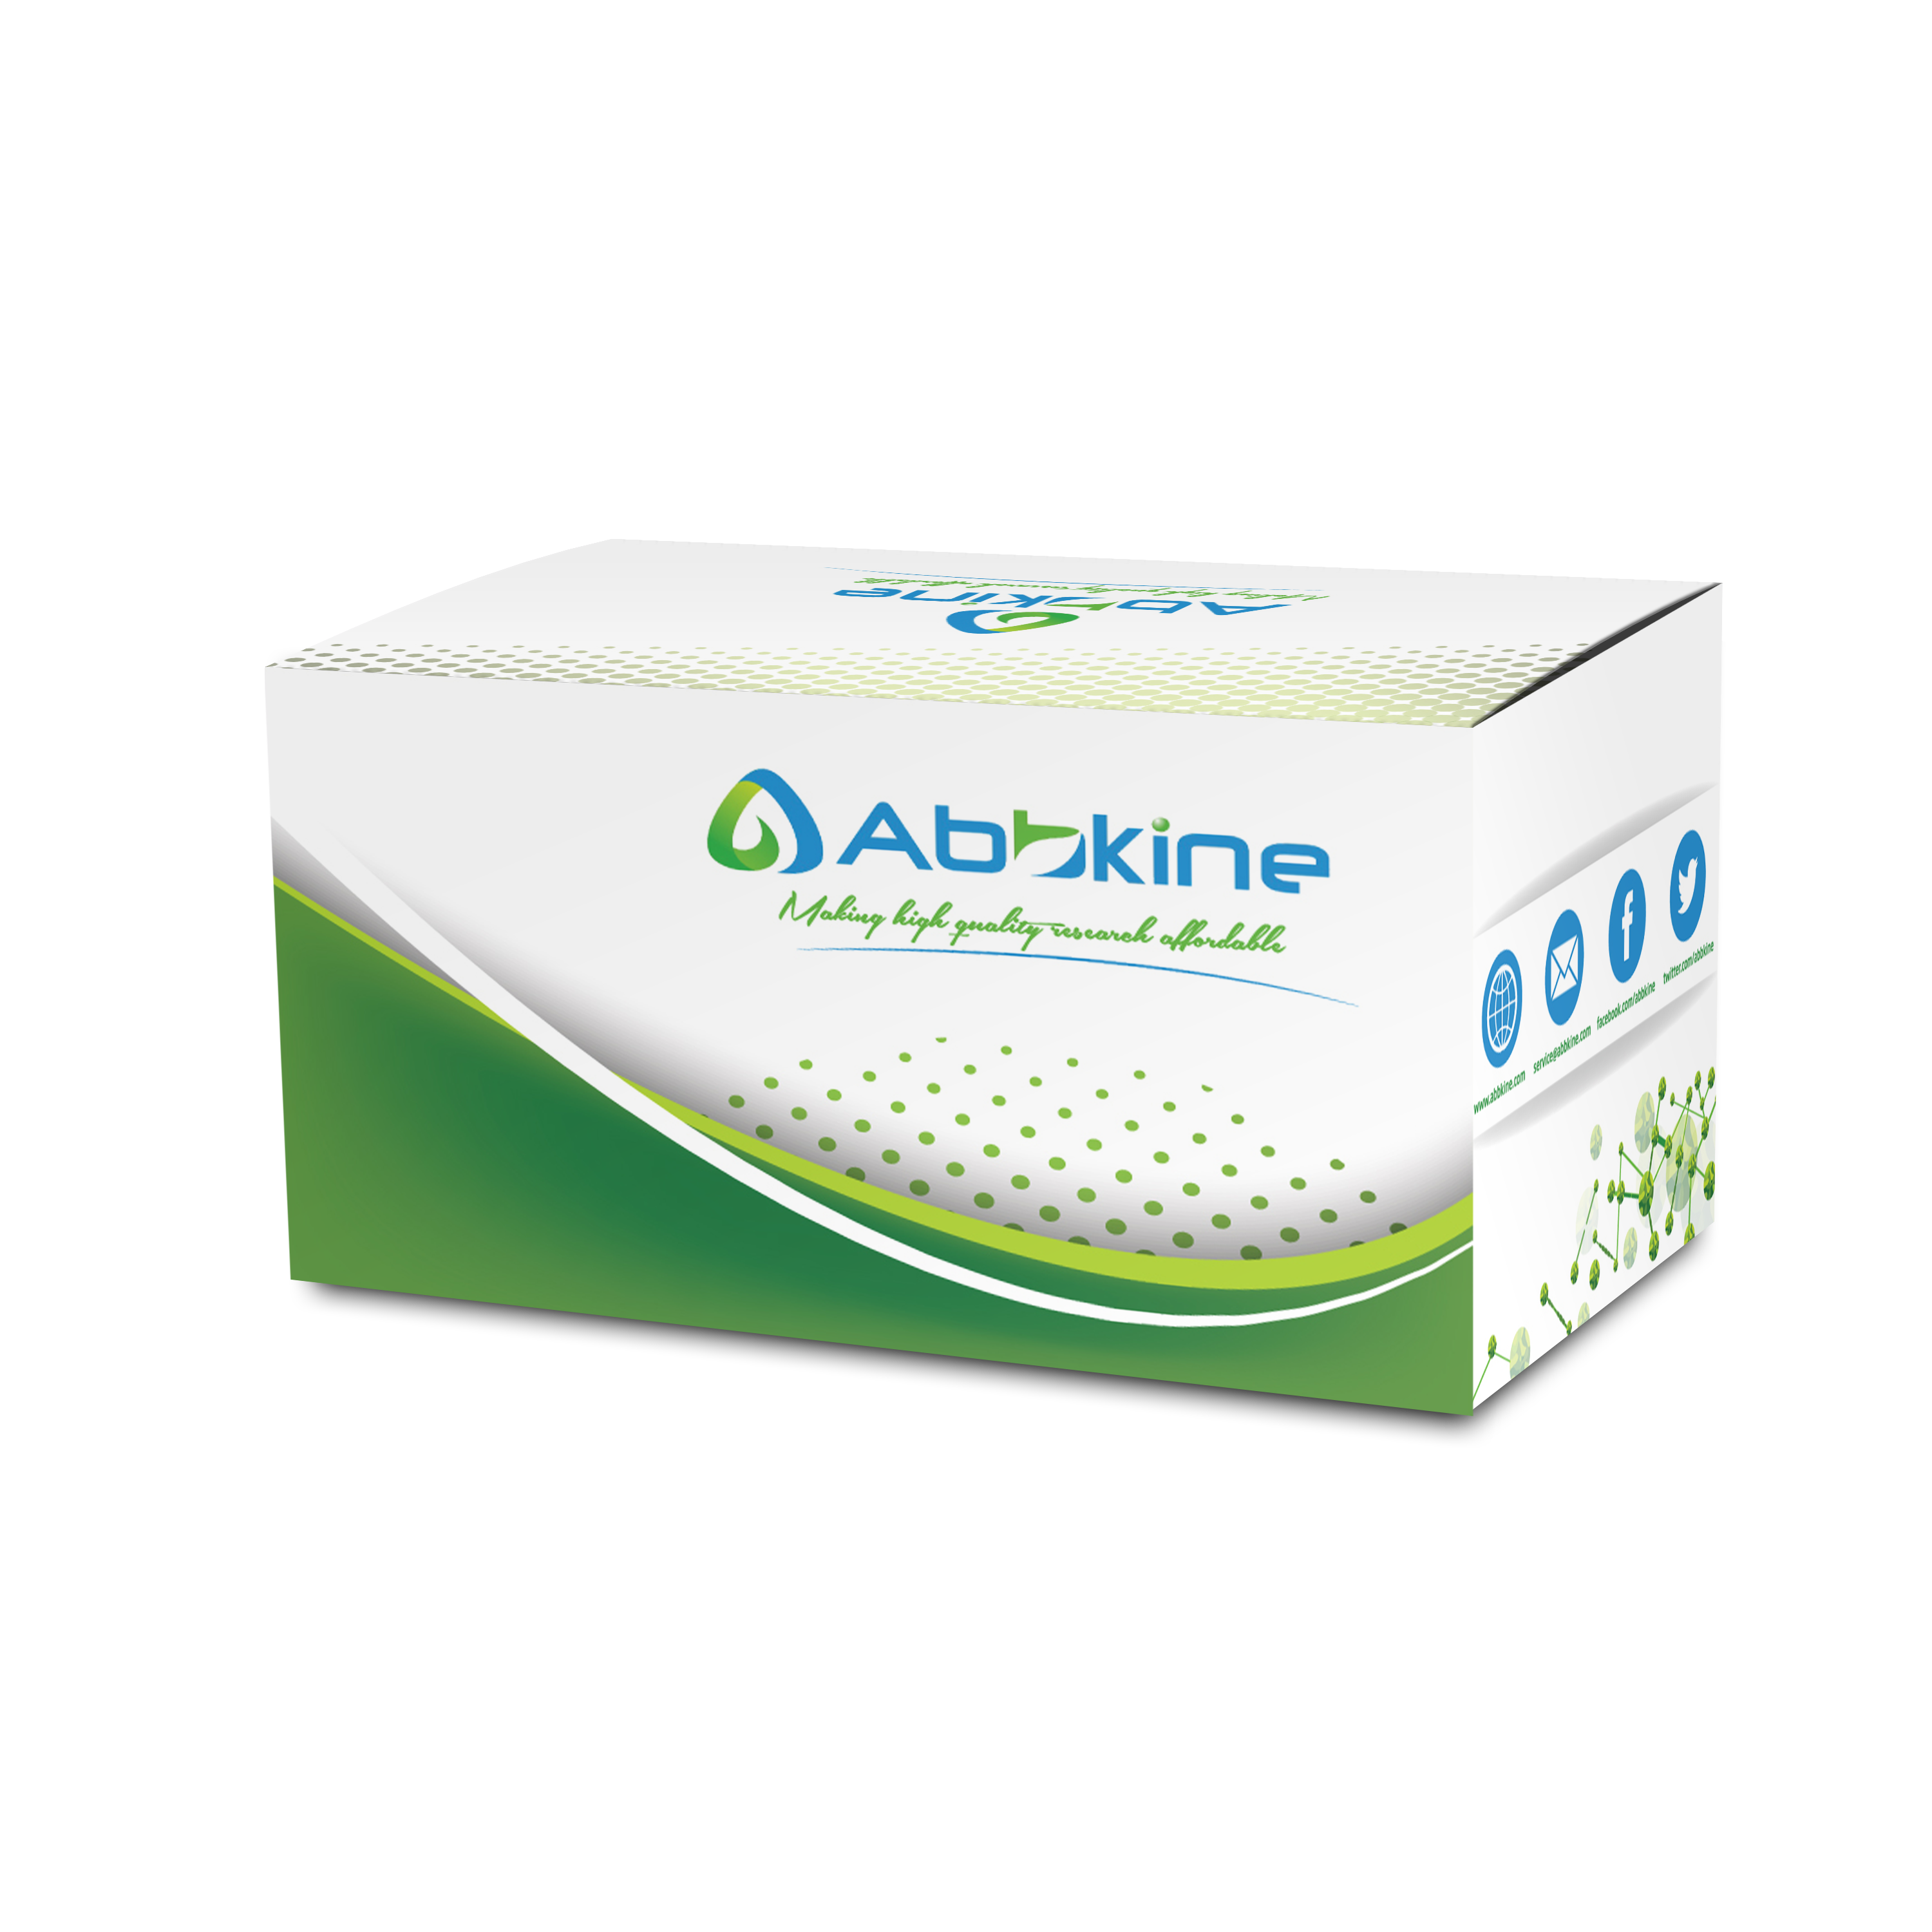 CheKine™ Micro High Density Lipoprotein Cholesterol (HDL-C) Assay Kit